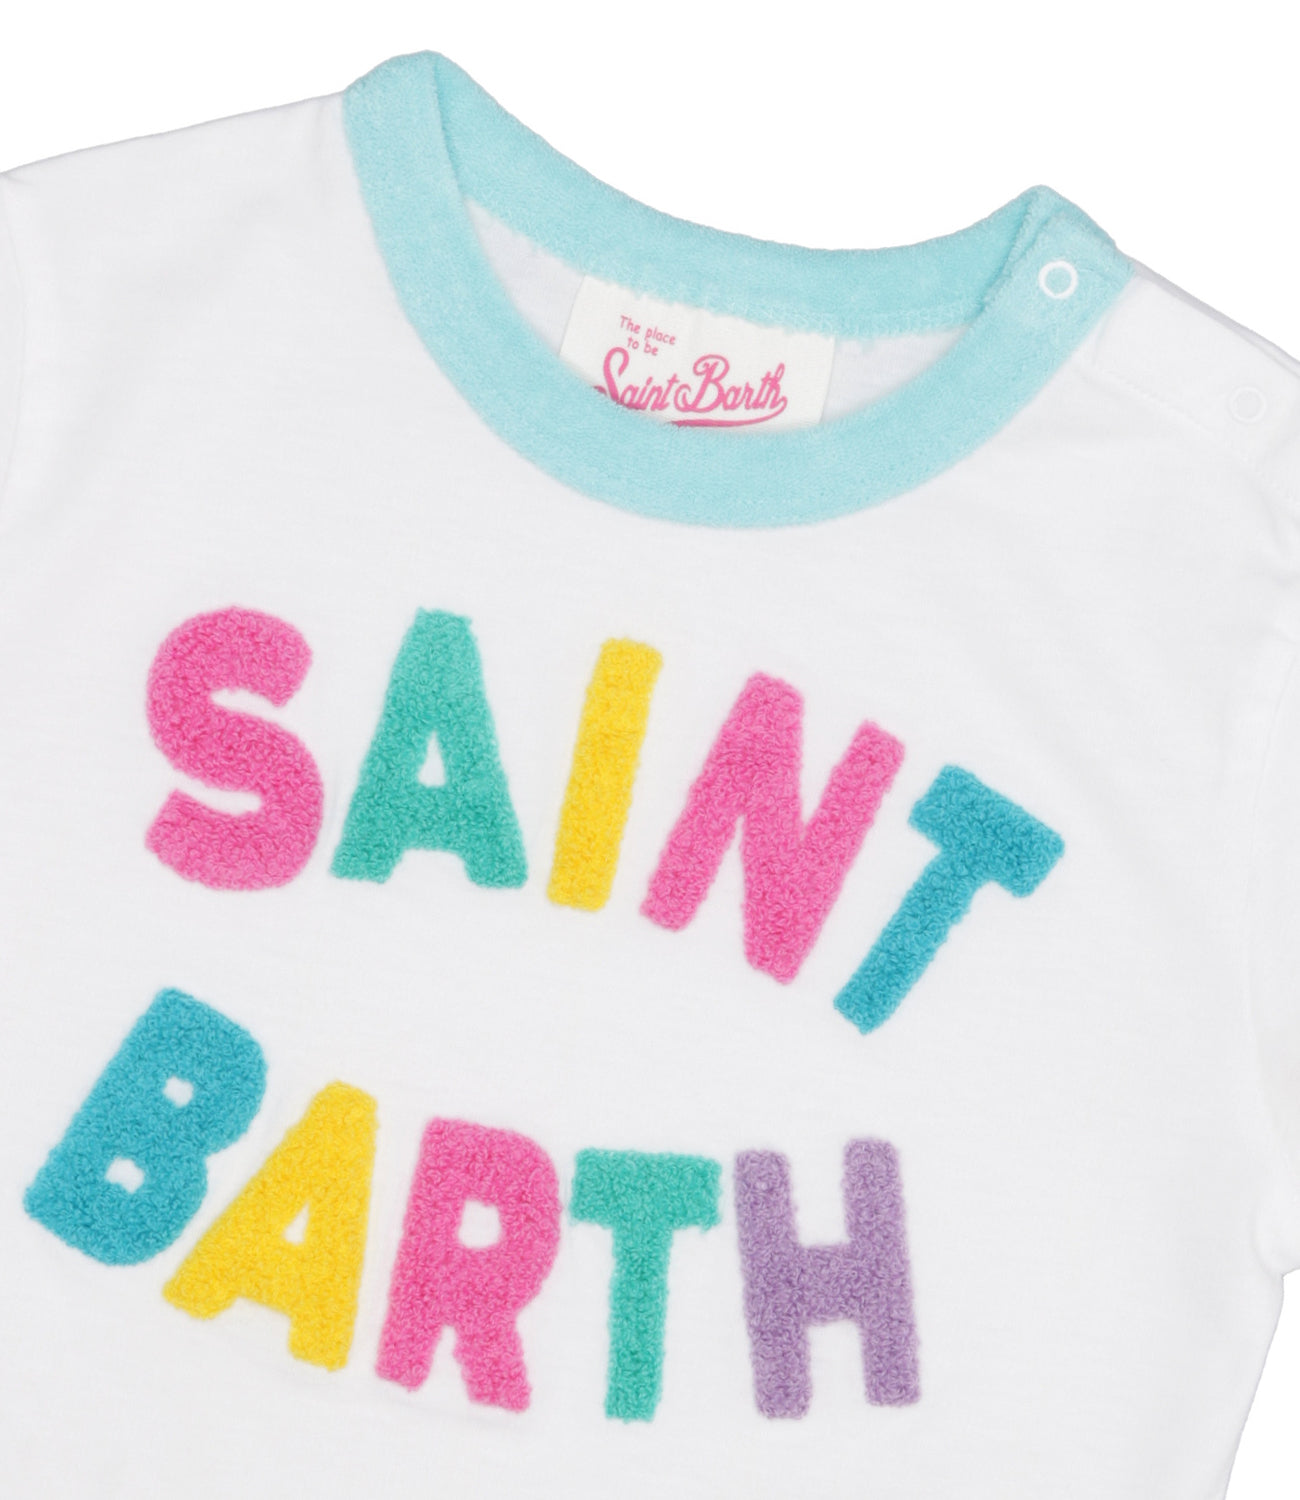 MC2 Saint Barth Kids | T-Shirt Elly Multicolor